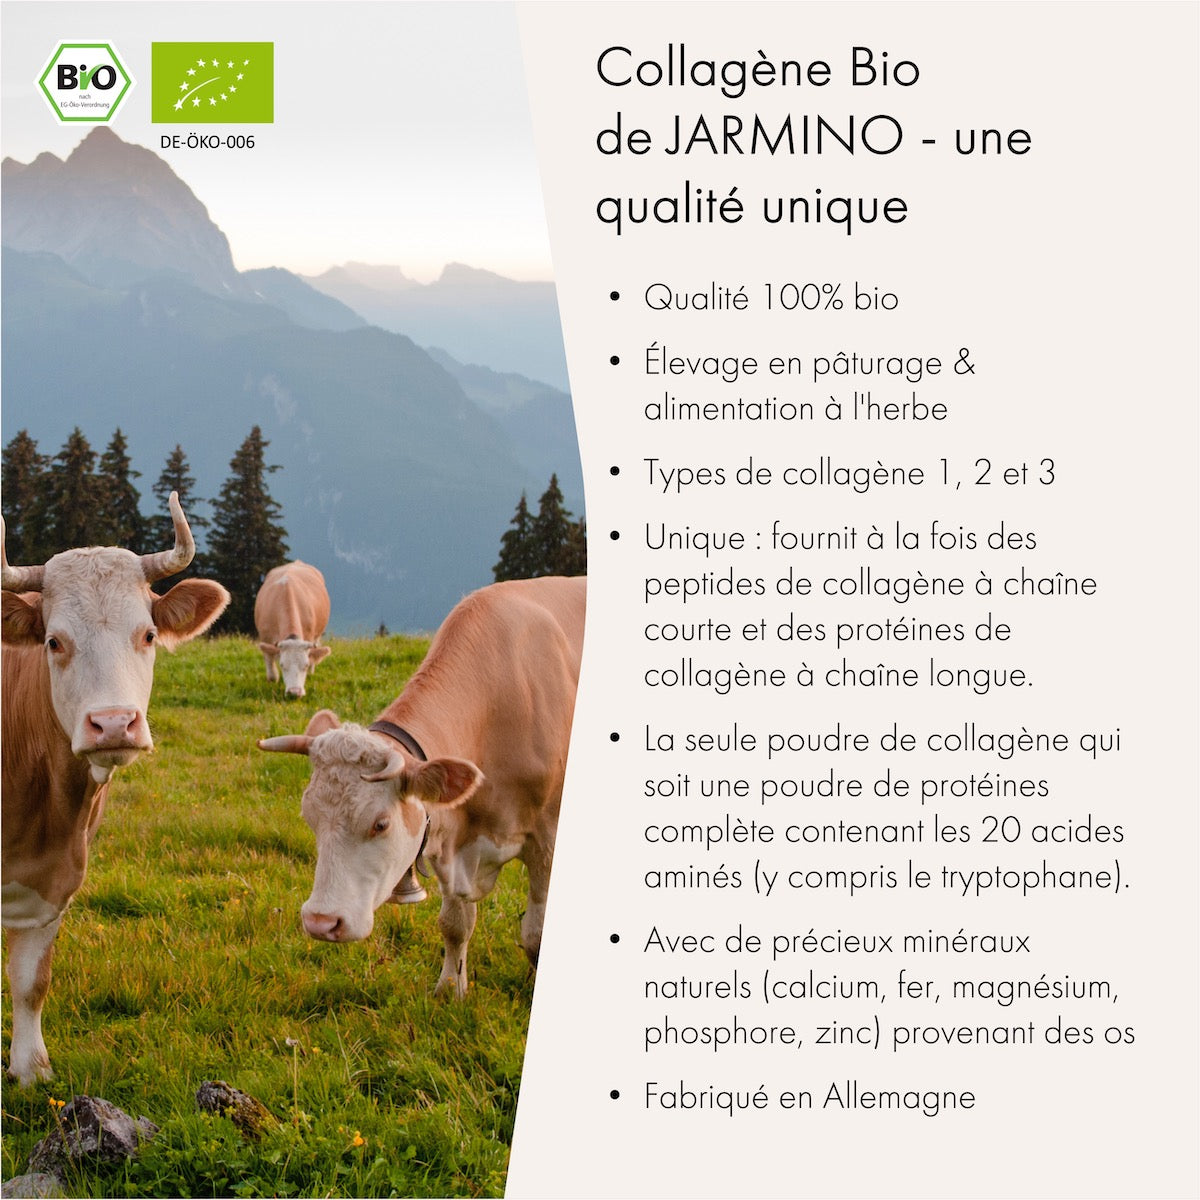 Collagène Bio + Barre de collagène GRATUITE